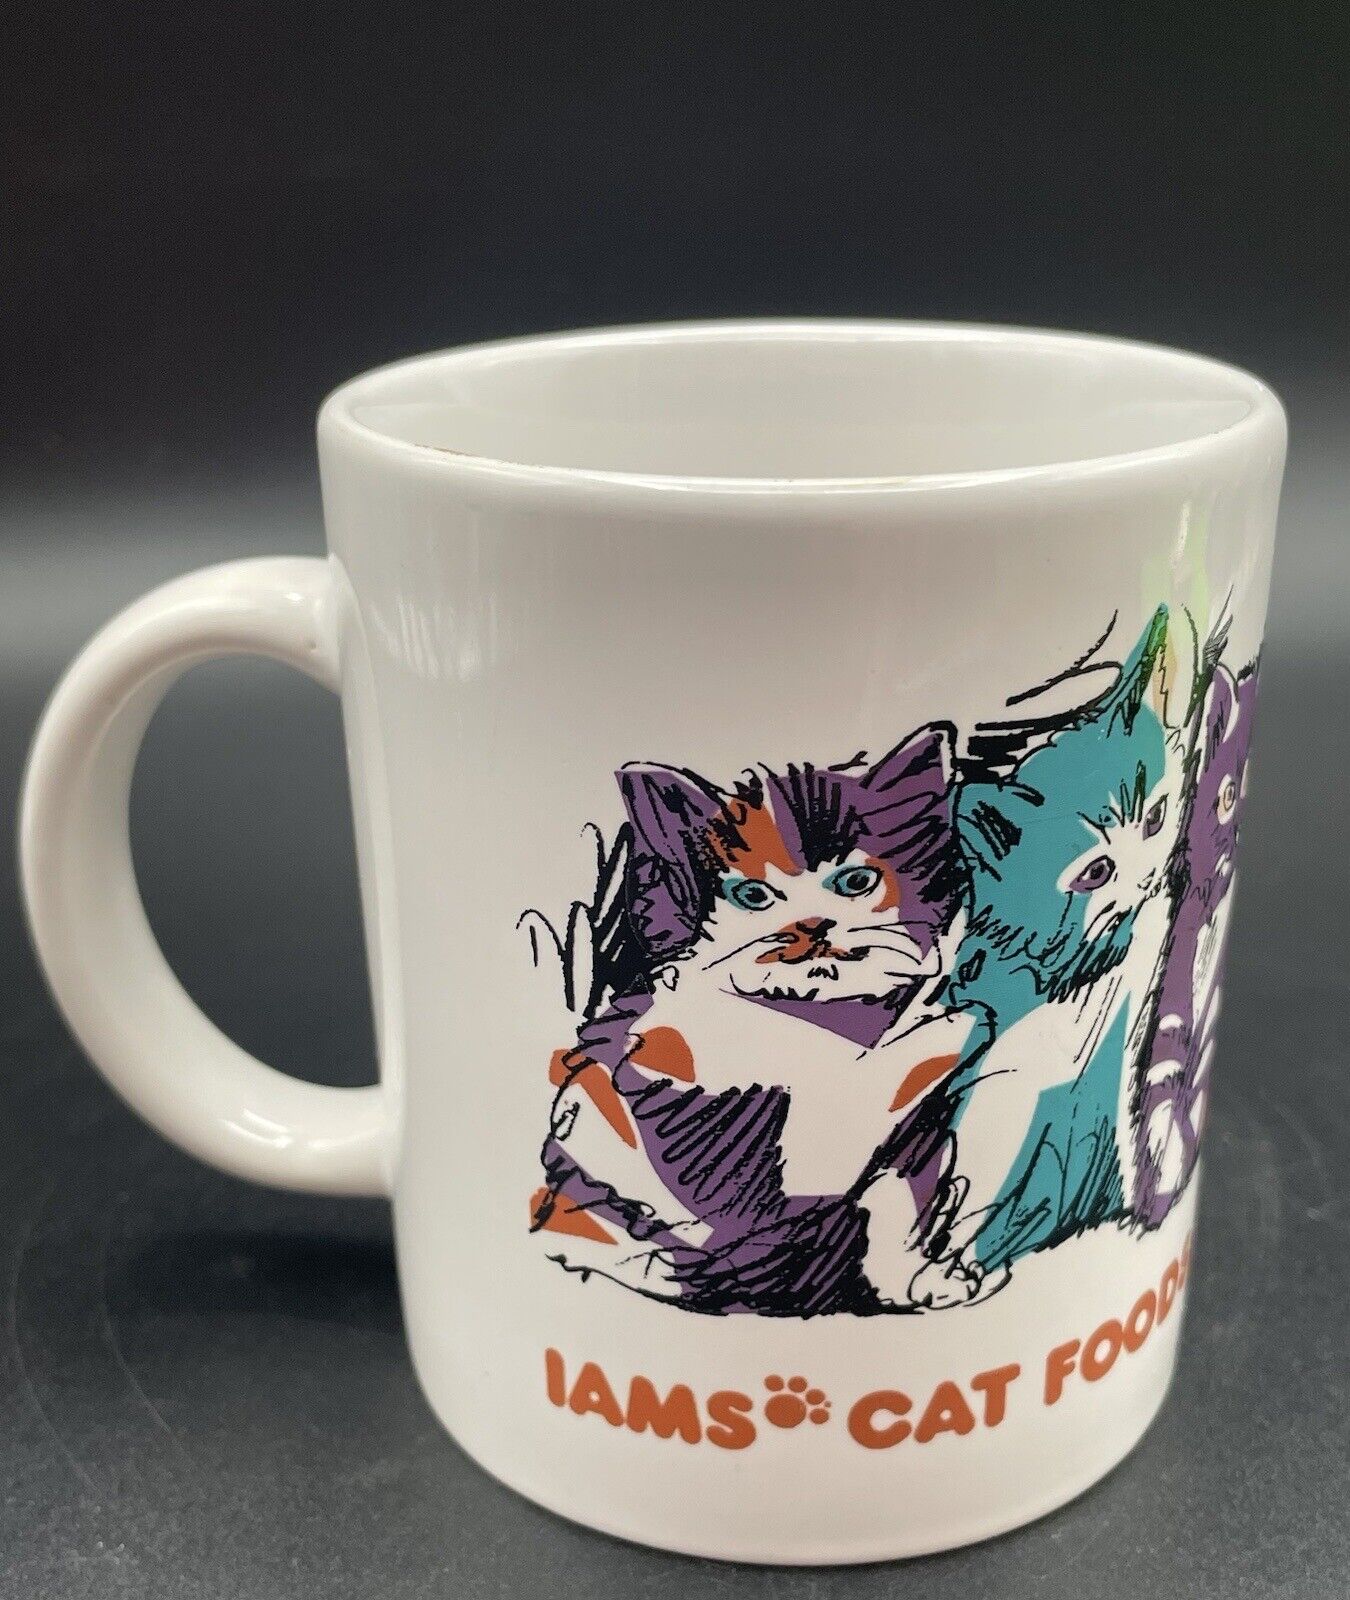 Iams Cat Food Good For Life Vintage Promotional Ceramic Coffee Cup Mug 10oz